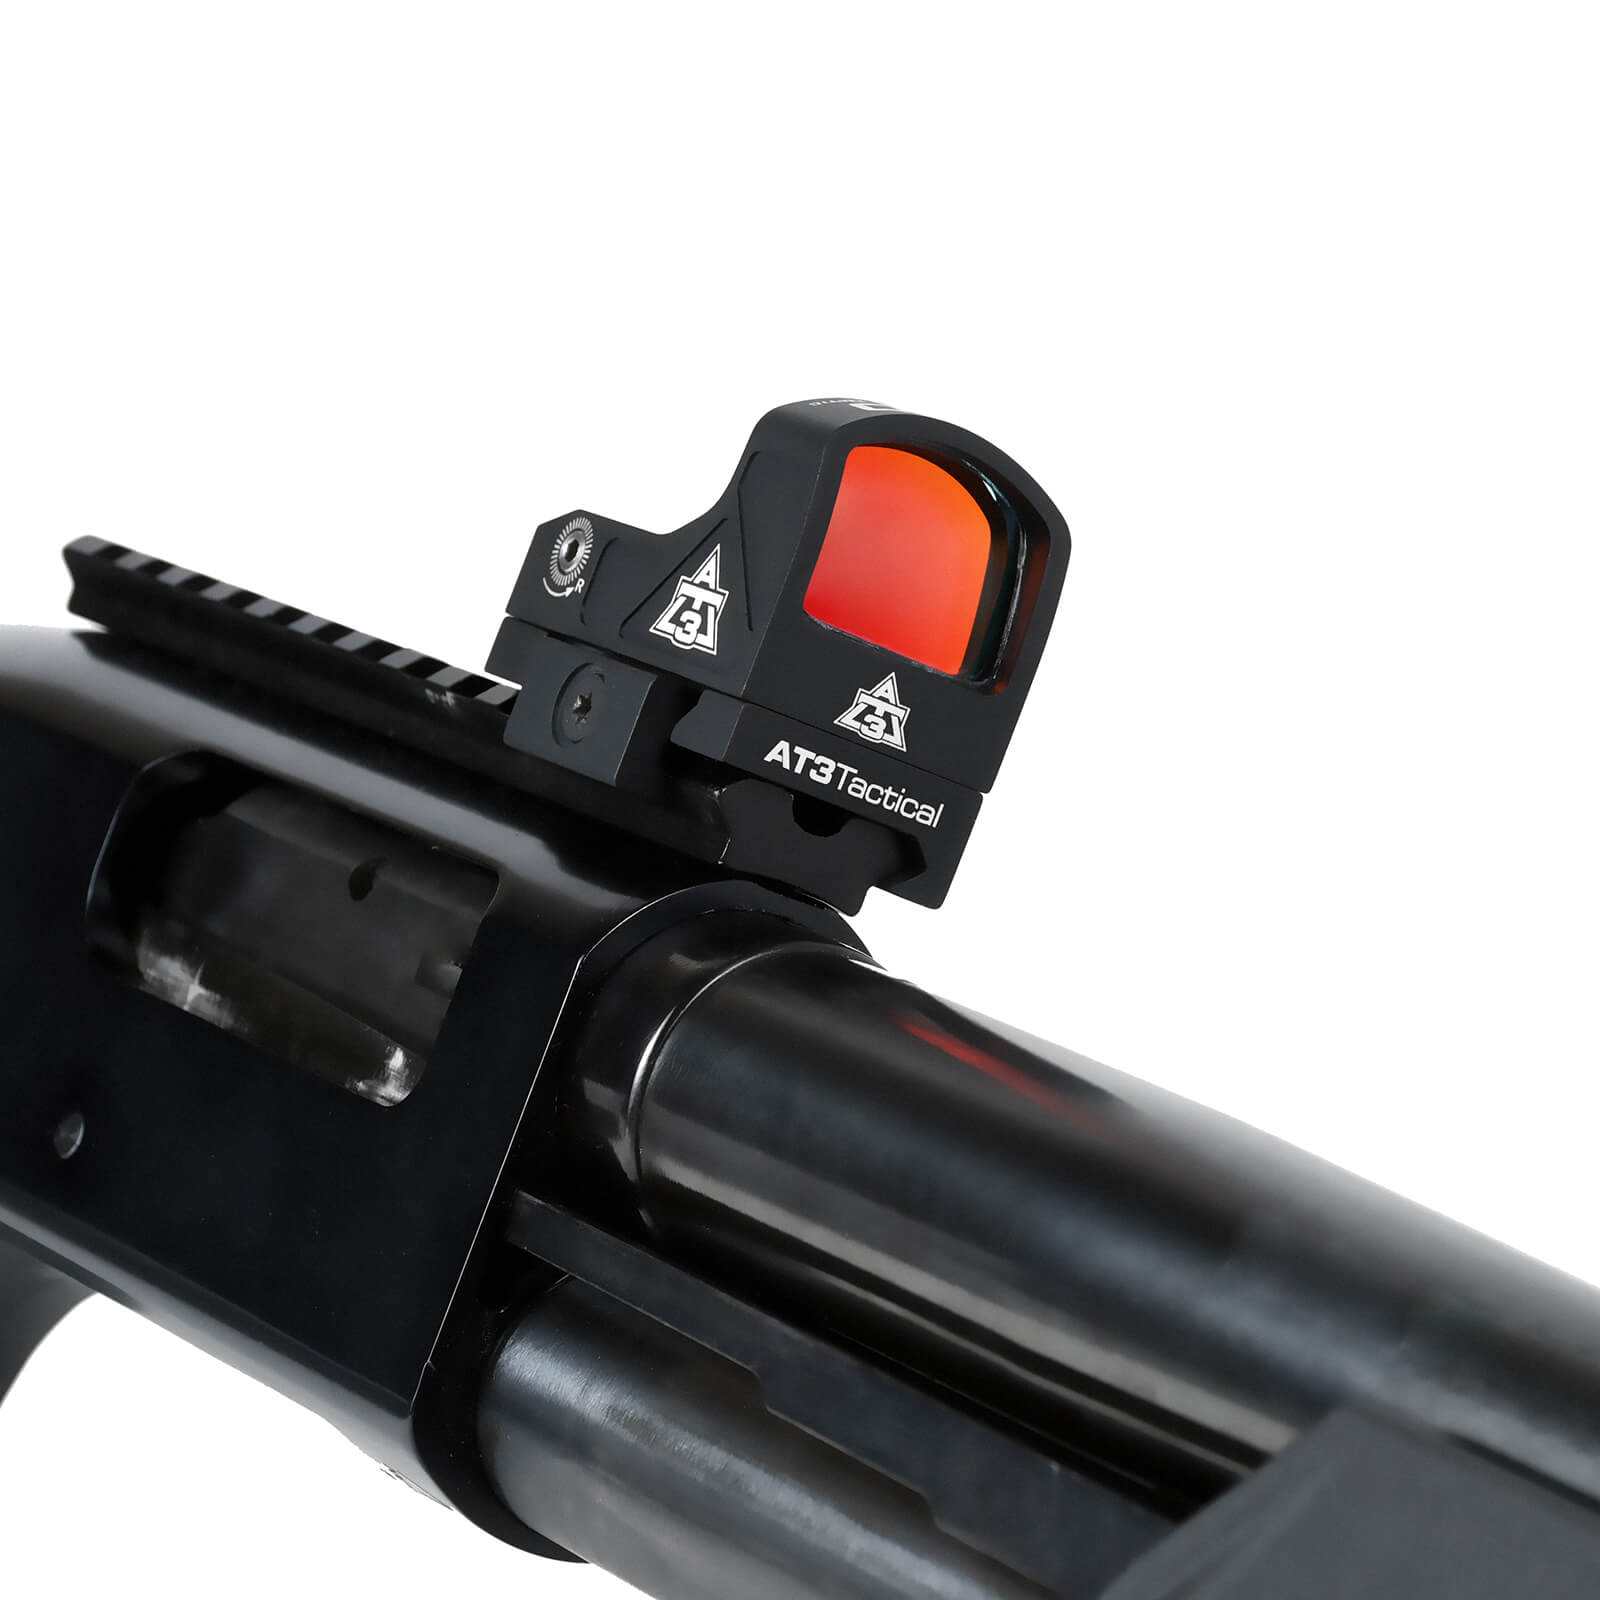 Shotgun Ade Advanced Optics Tactical Micro Compact Mini Open Reflex Red Dot Sight with Integral Weaver-picatinny Mount for Pistol/Rifle